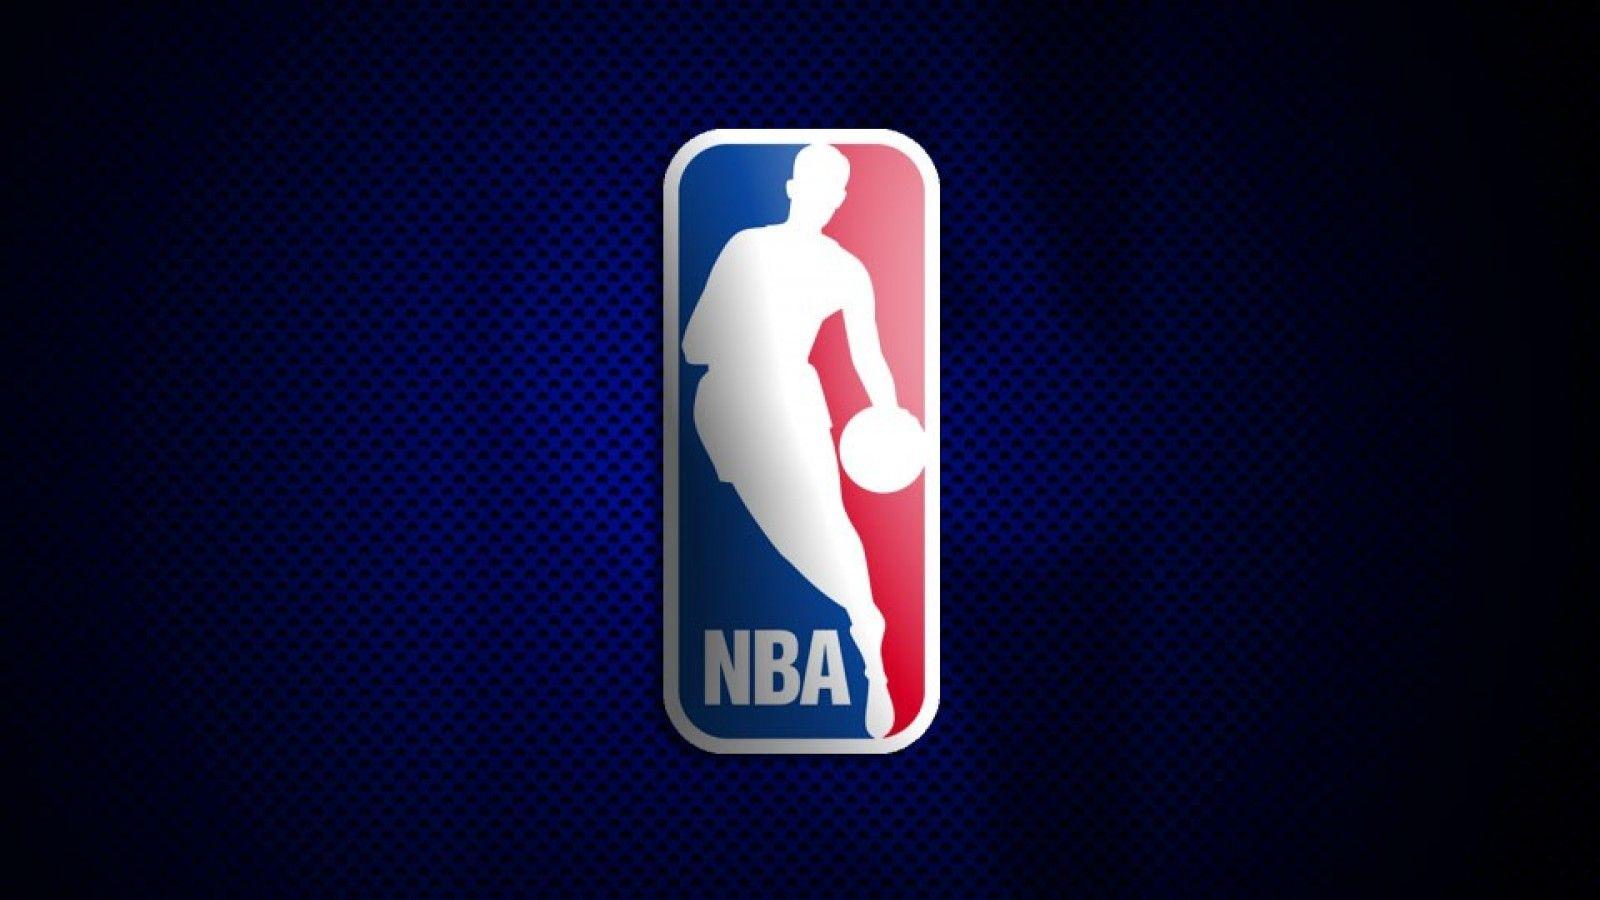 NBA Logo wallpaper 2018 in Basketball